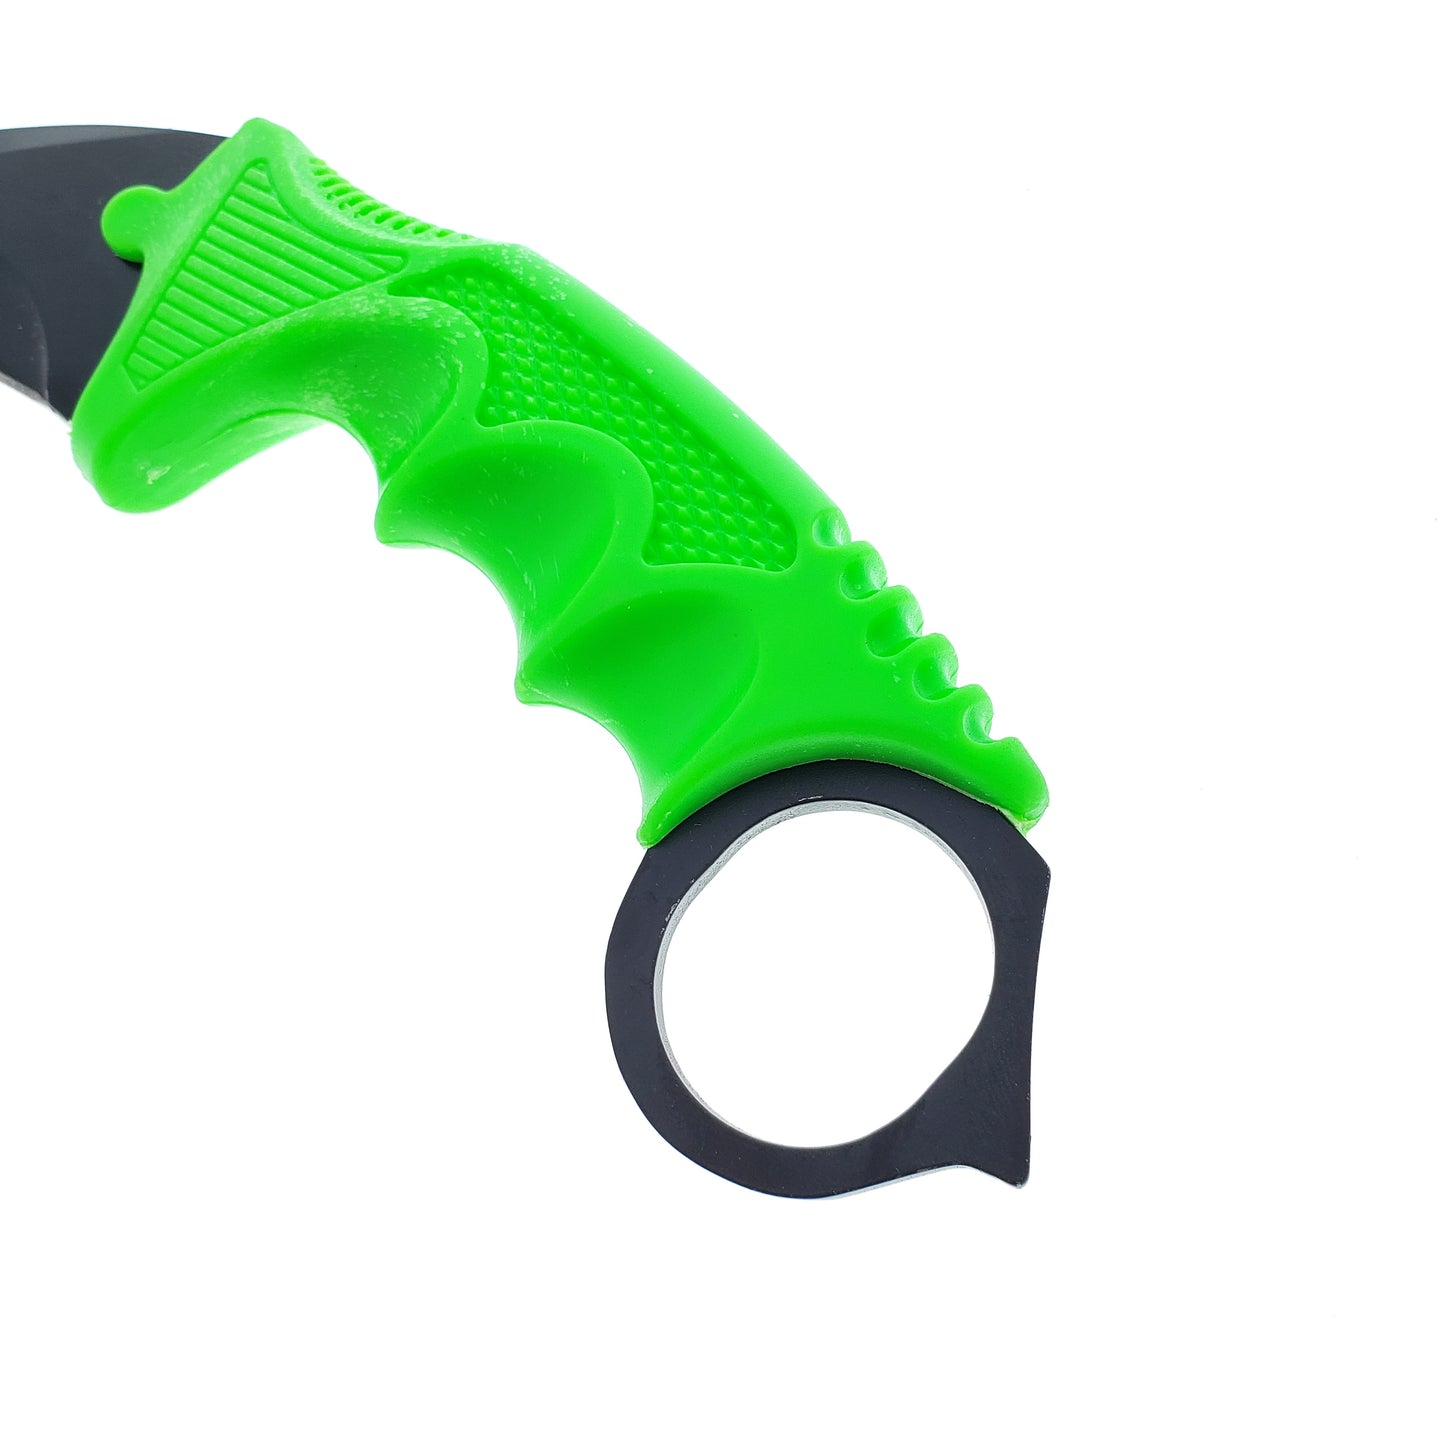 Wholesale Green Karambit Knife Distributor | Karambit Knives In-Bulk